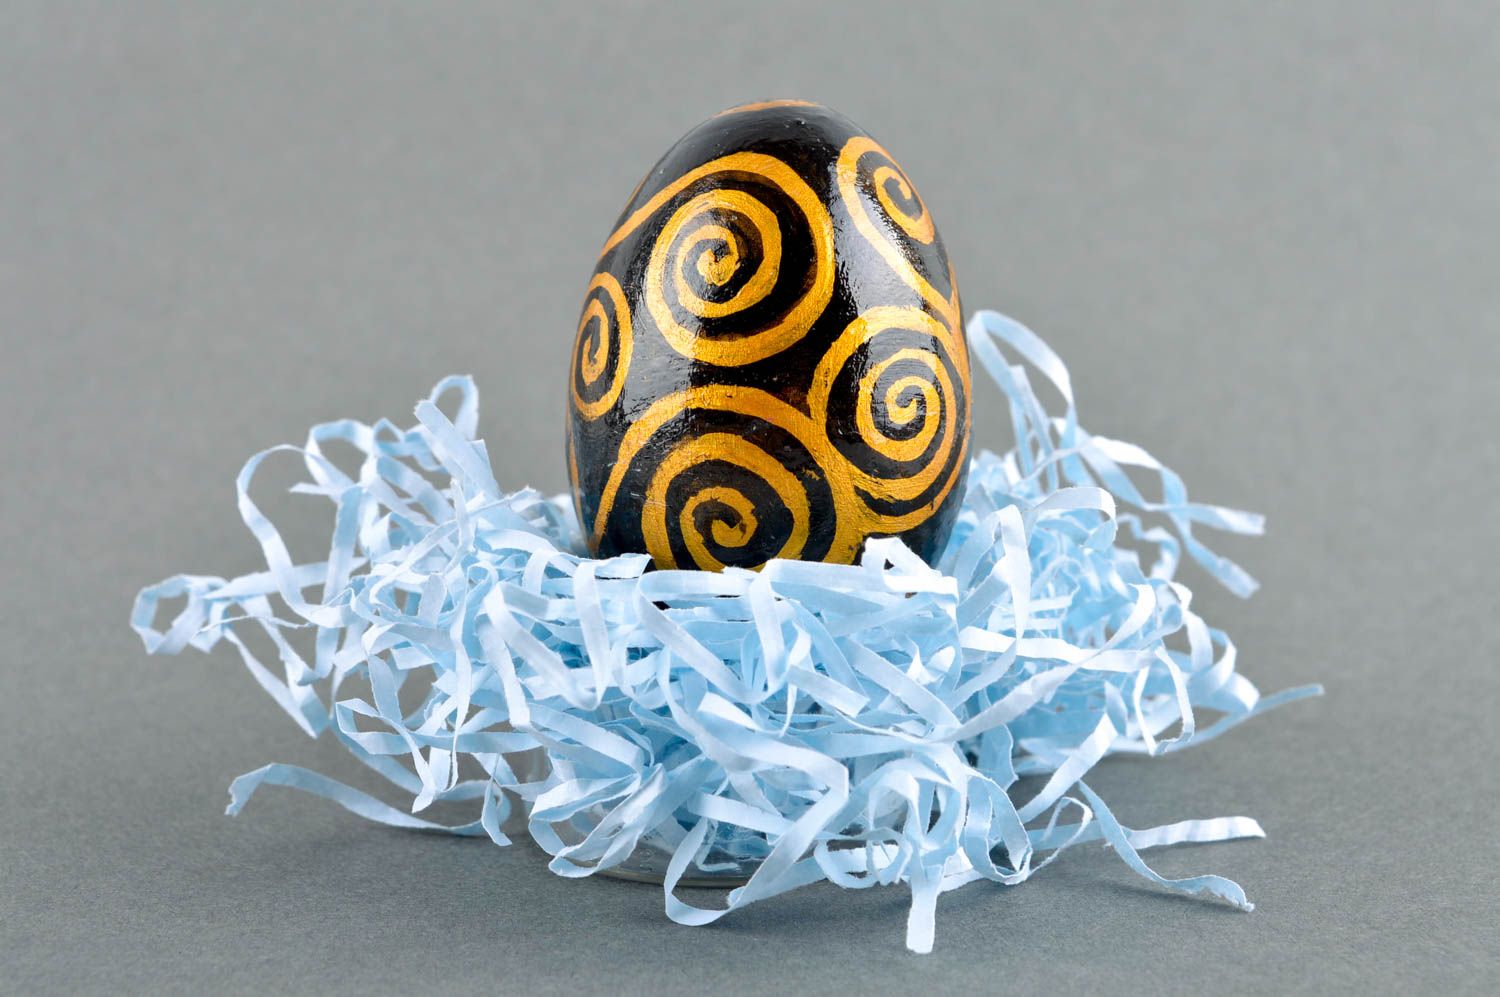 Handmade Easter egg decorative egg Easter presents Easter interior decor ideas photo 1